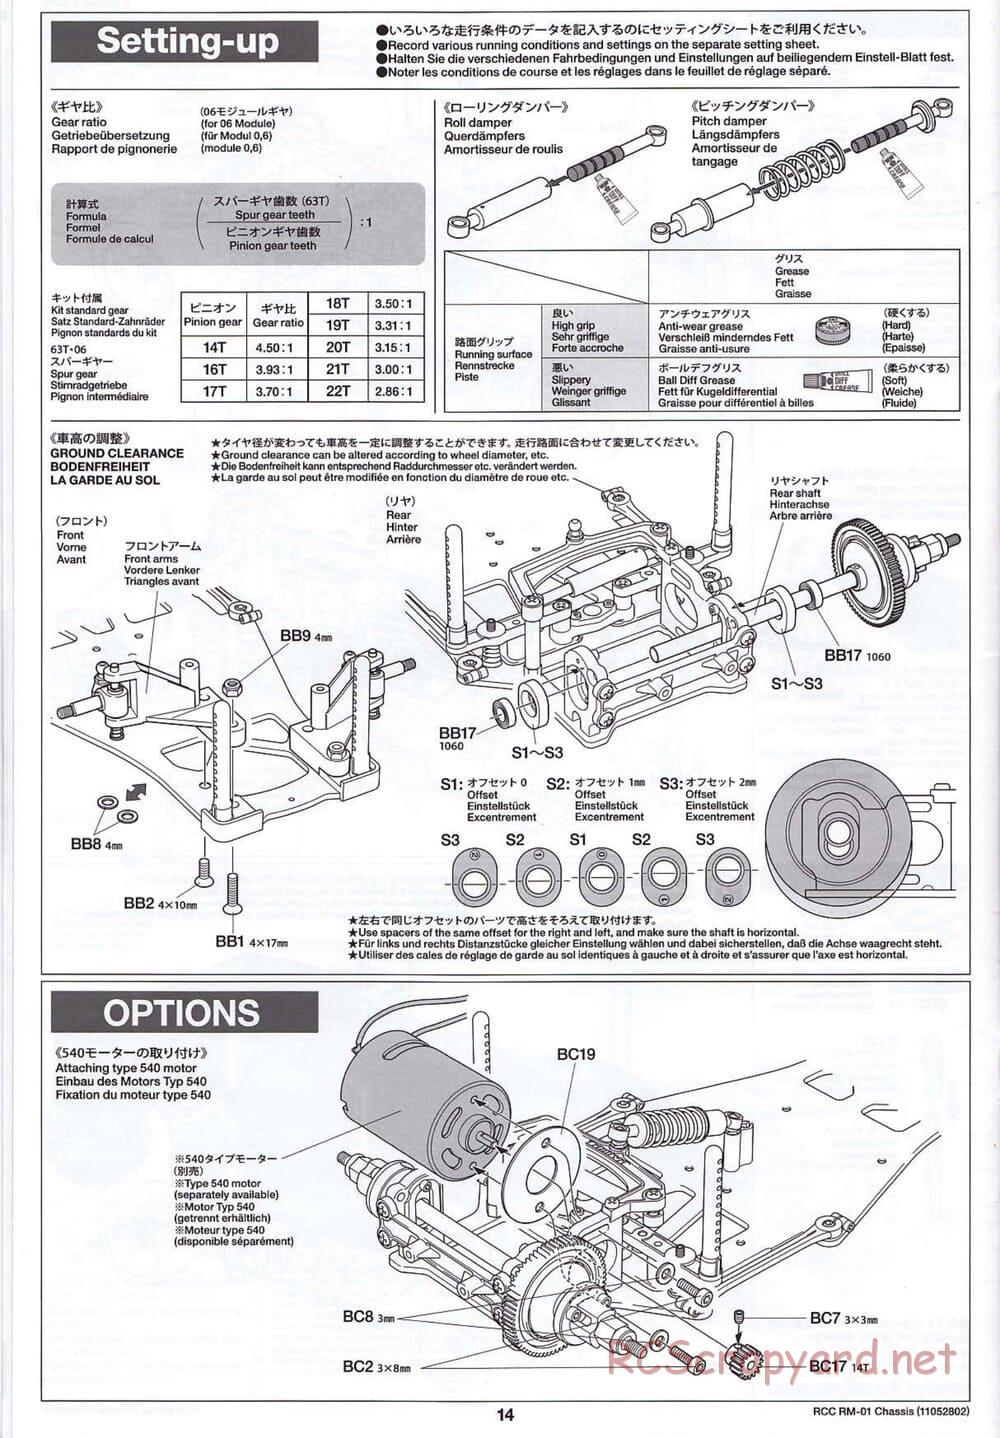 Tamiya - RM-01 Chassis - Manual - Page 14